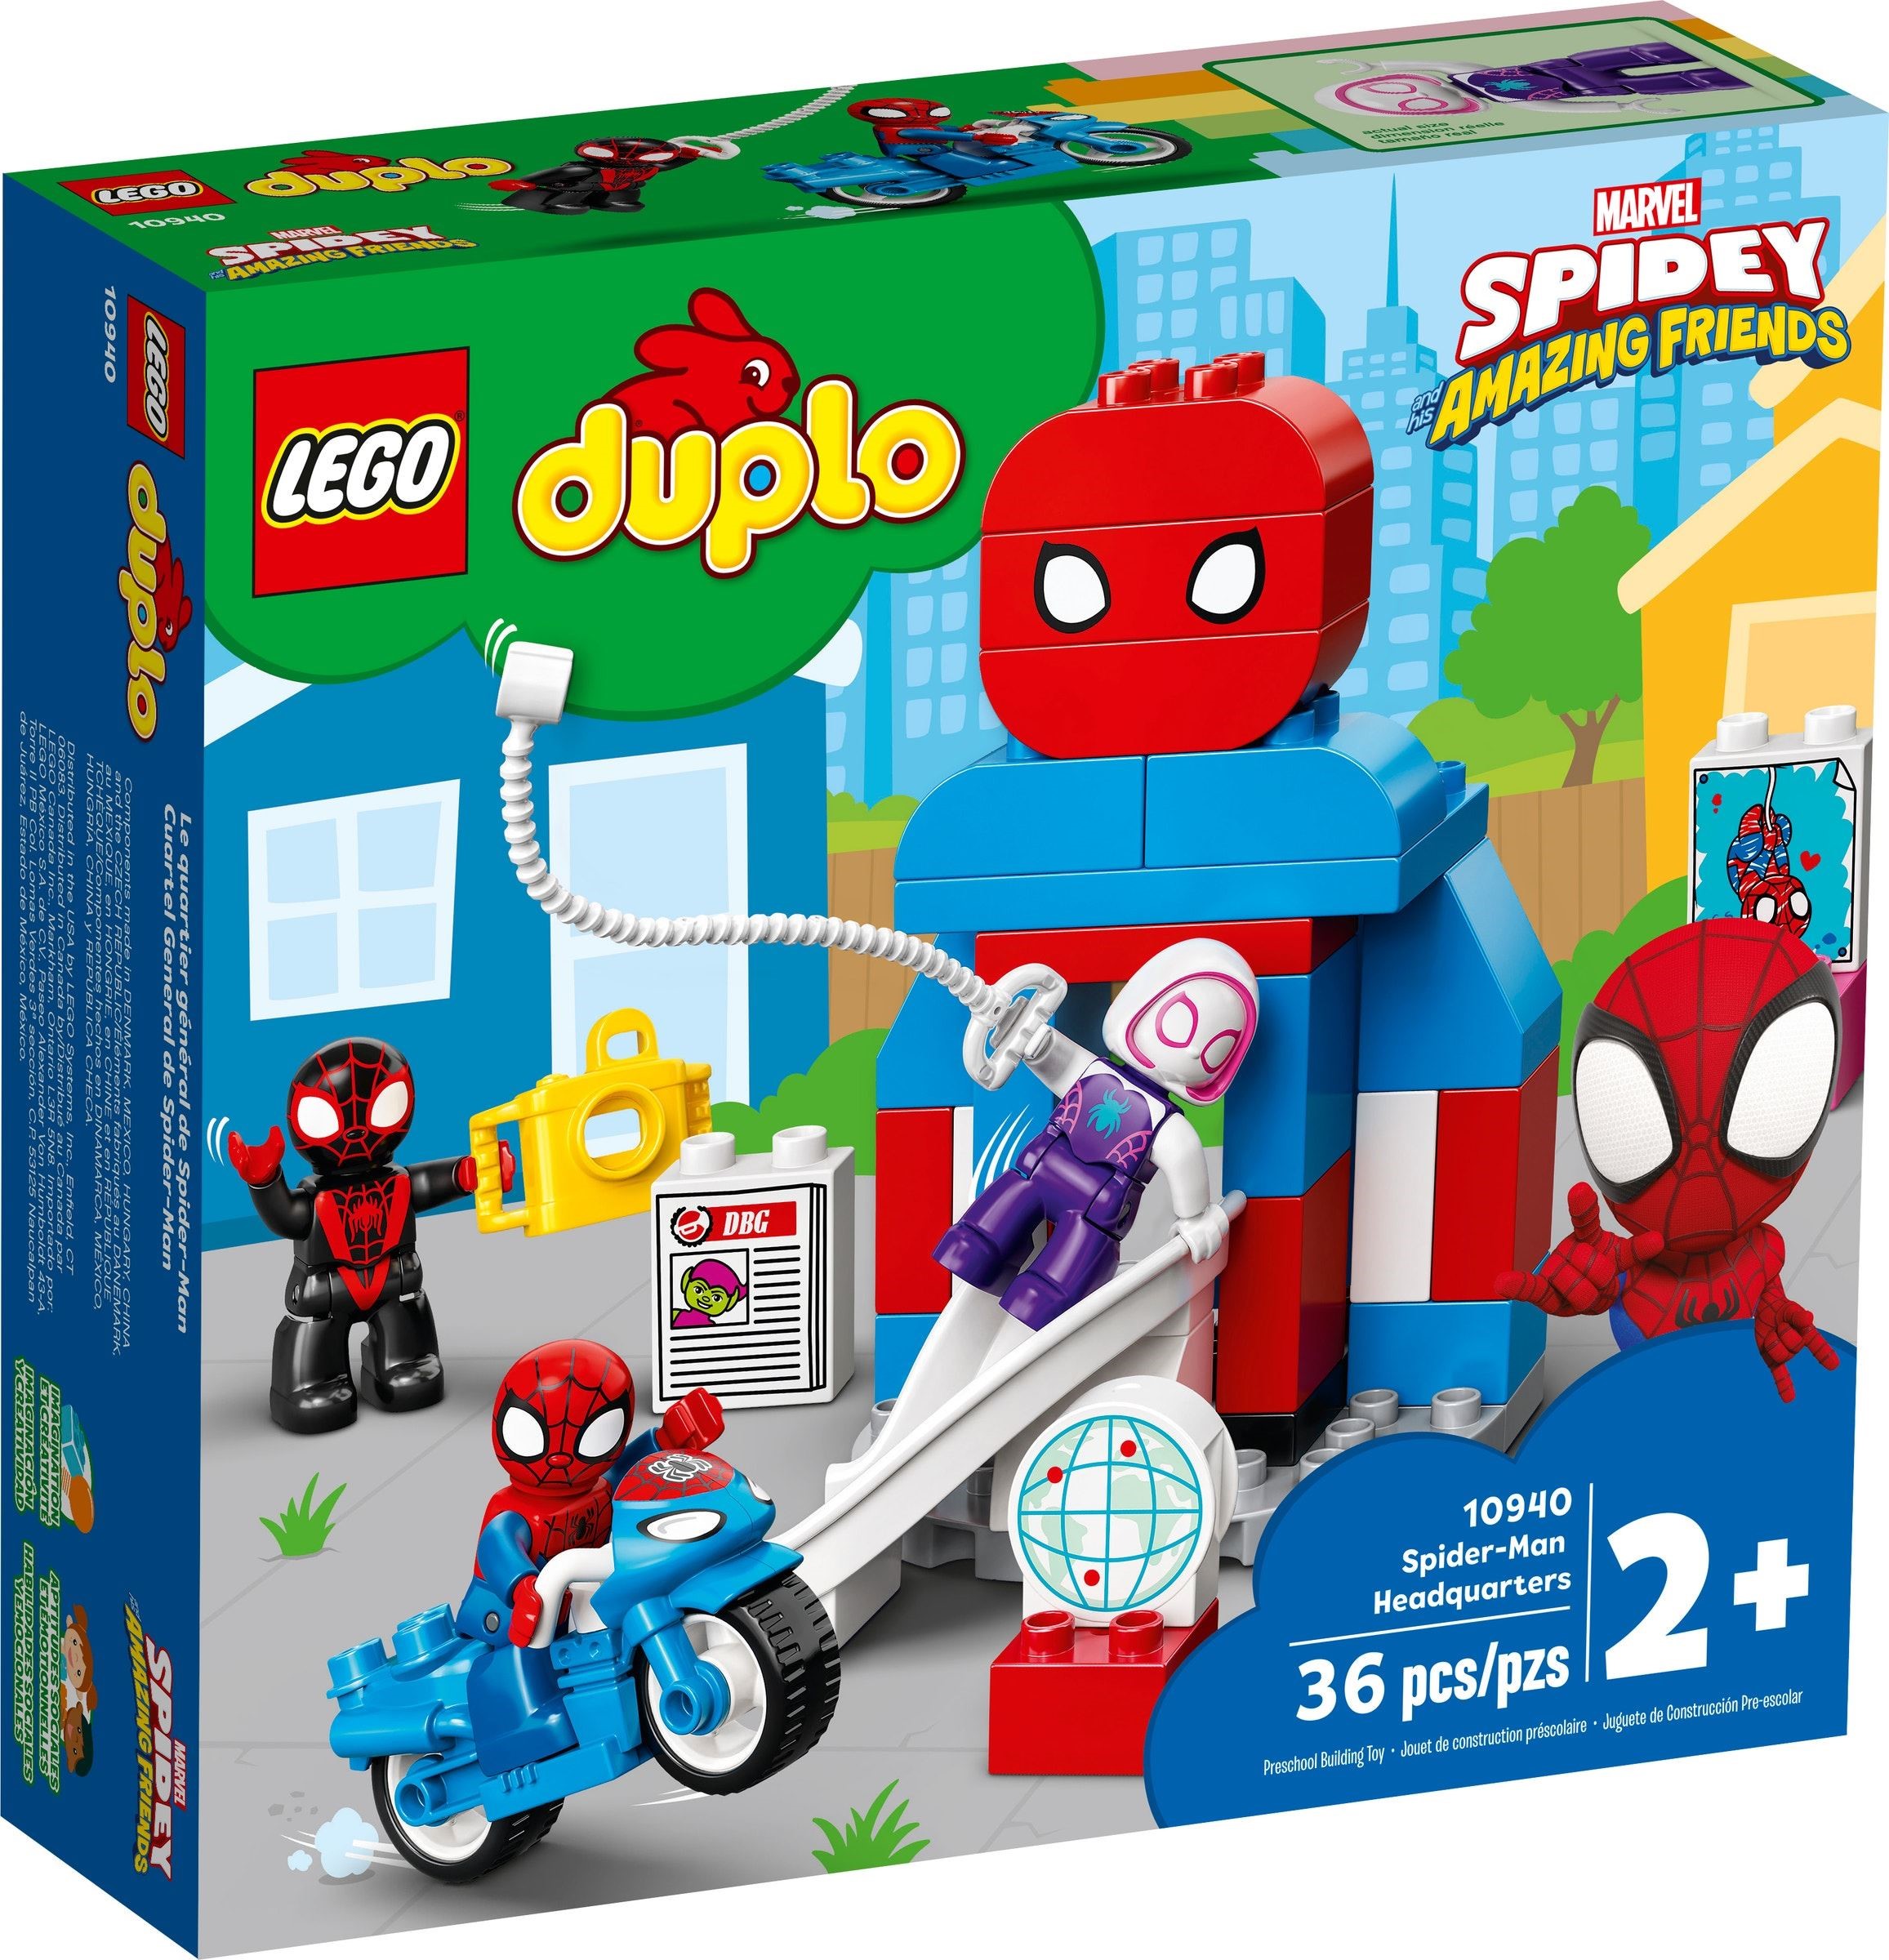 Bricker - Construction Toy by LEGO 10940 SpiderMan Headquarters